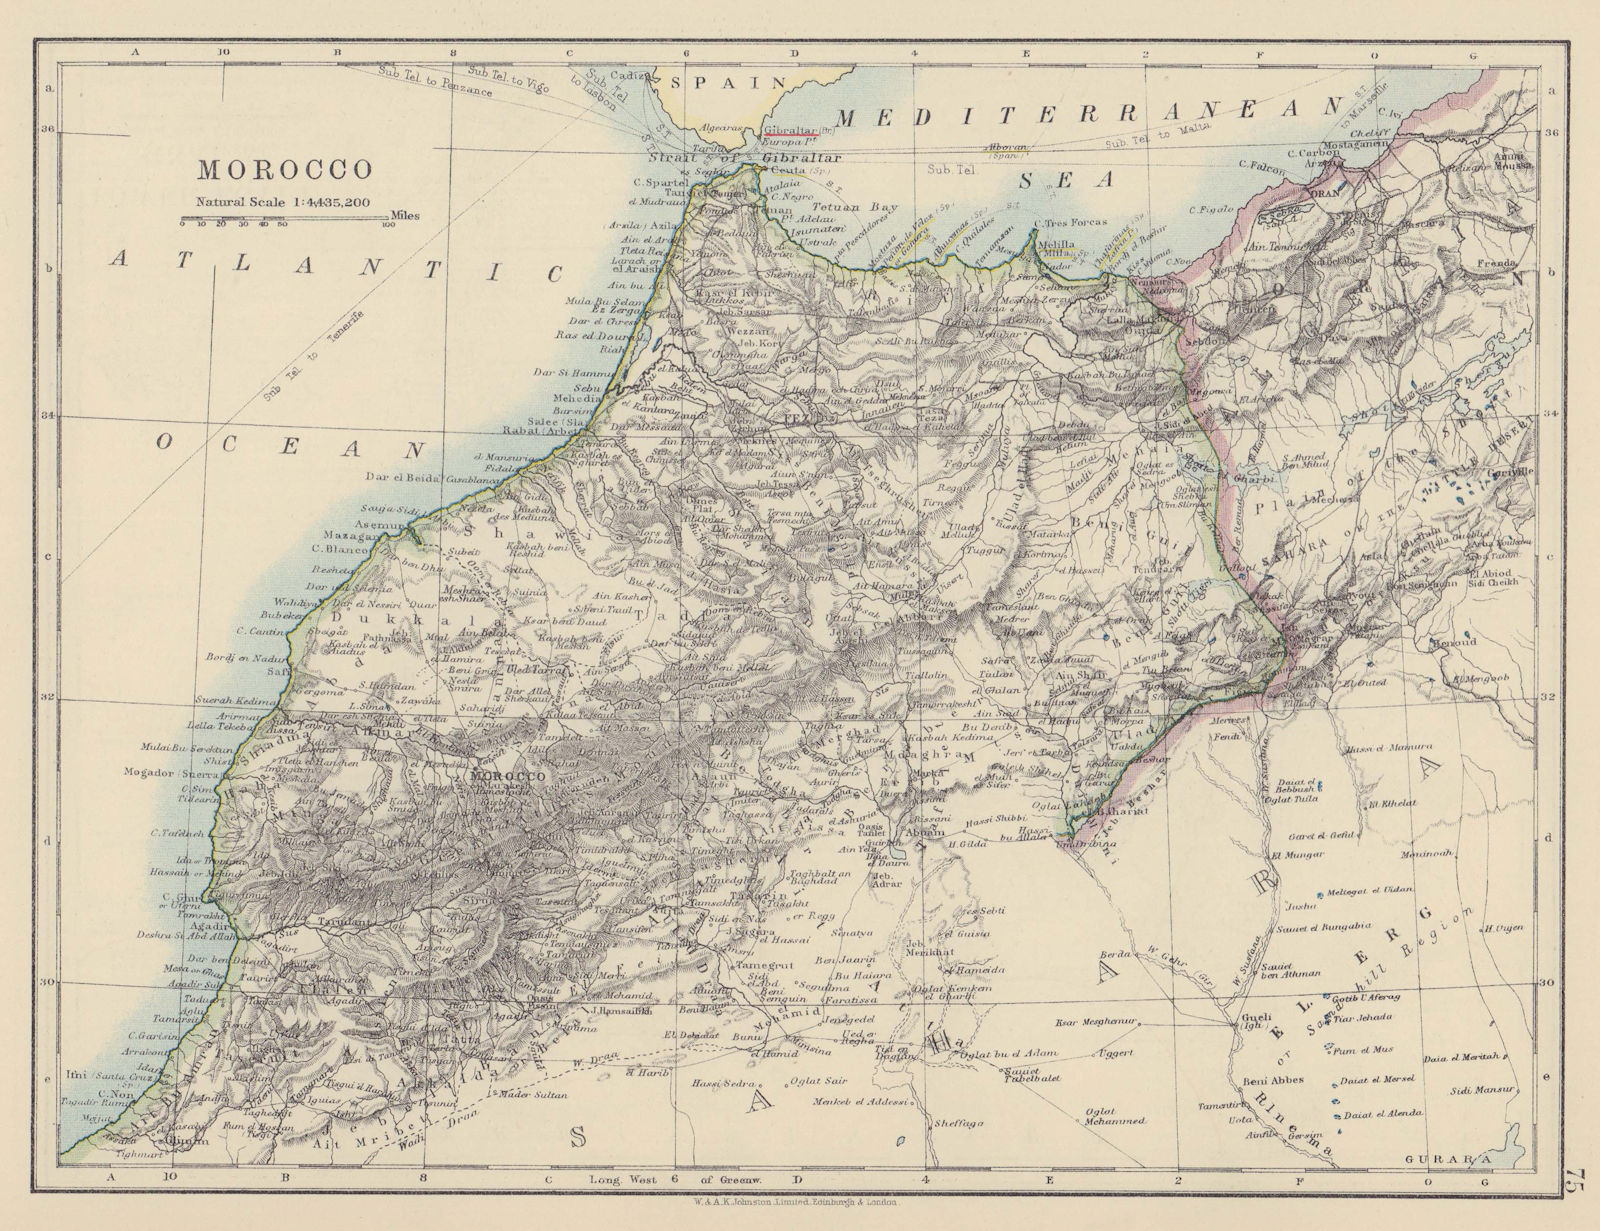 MOROCCO. Showing Atlas mountains rivers towns. Marrakech. JOHNSTON 1910 map